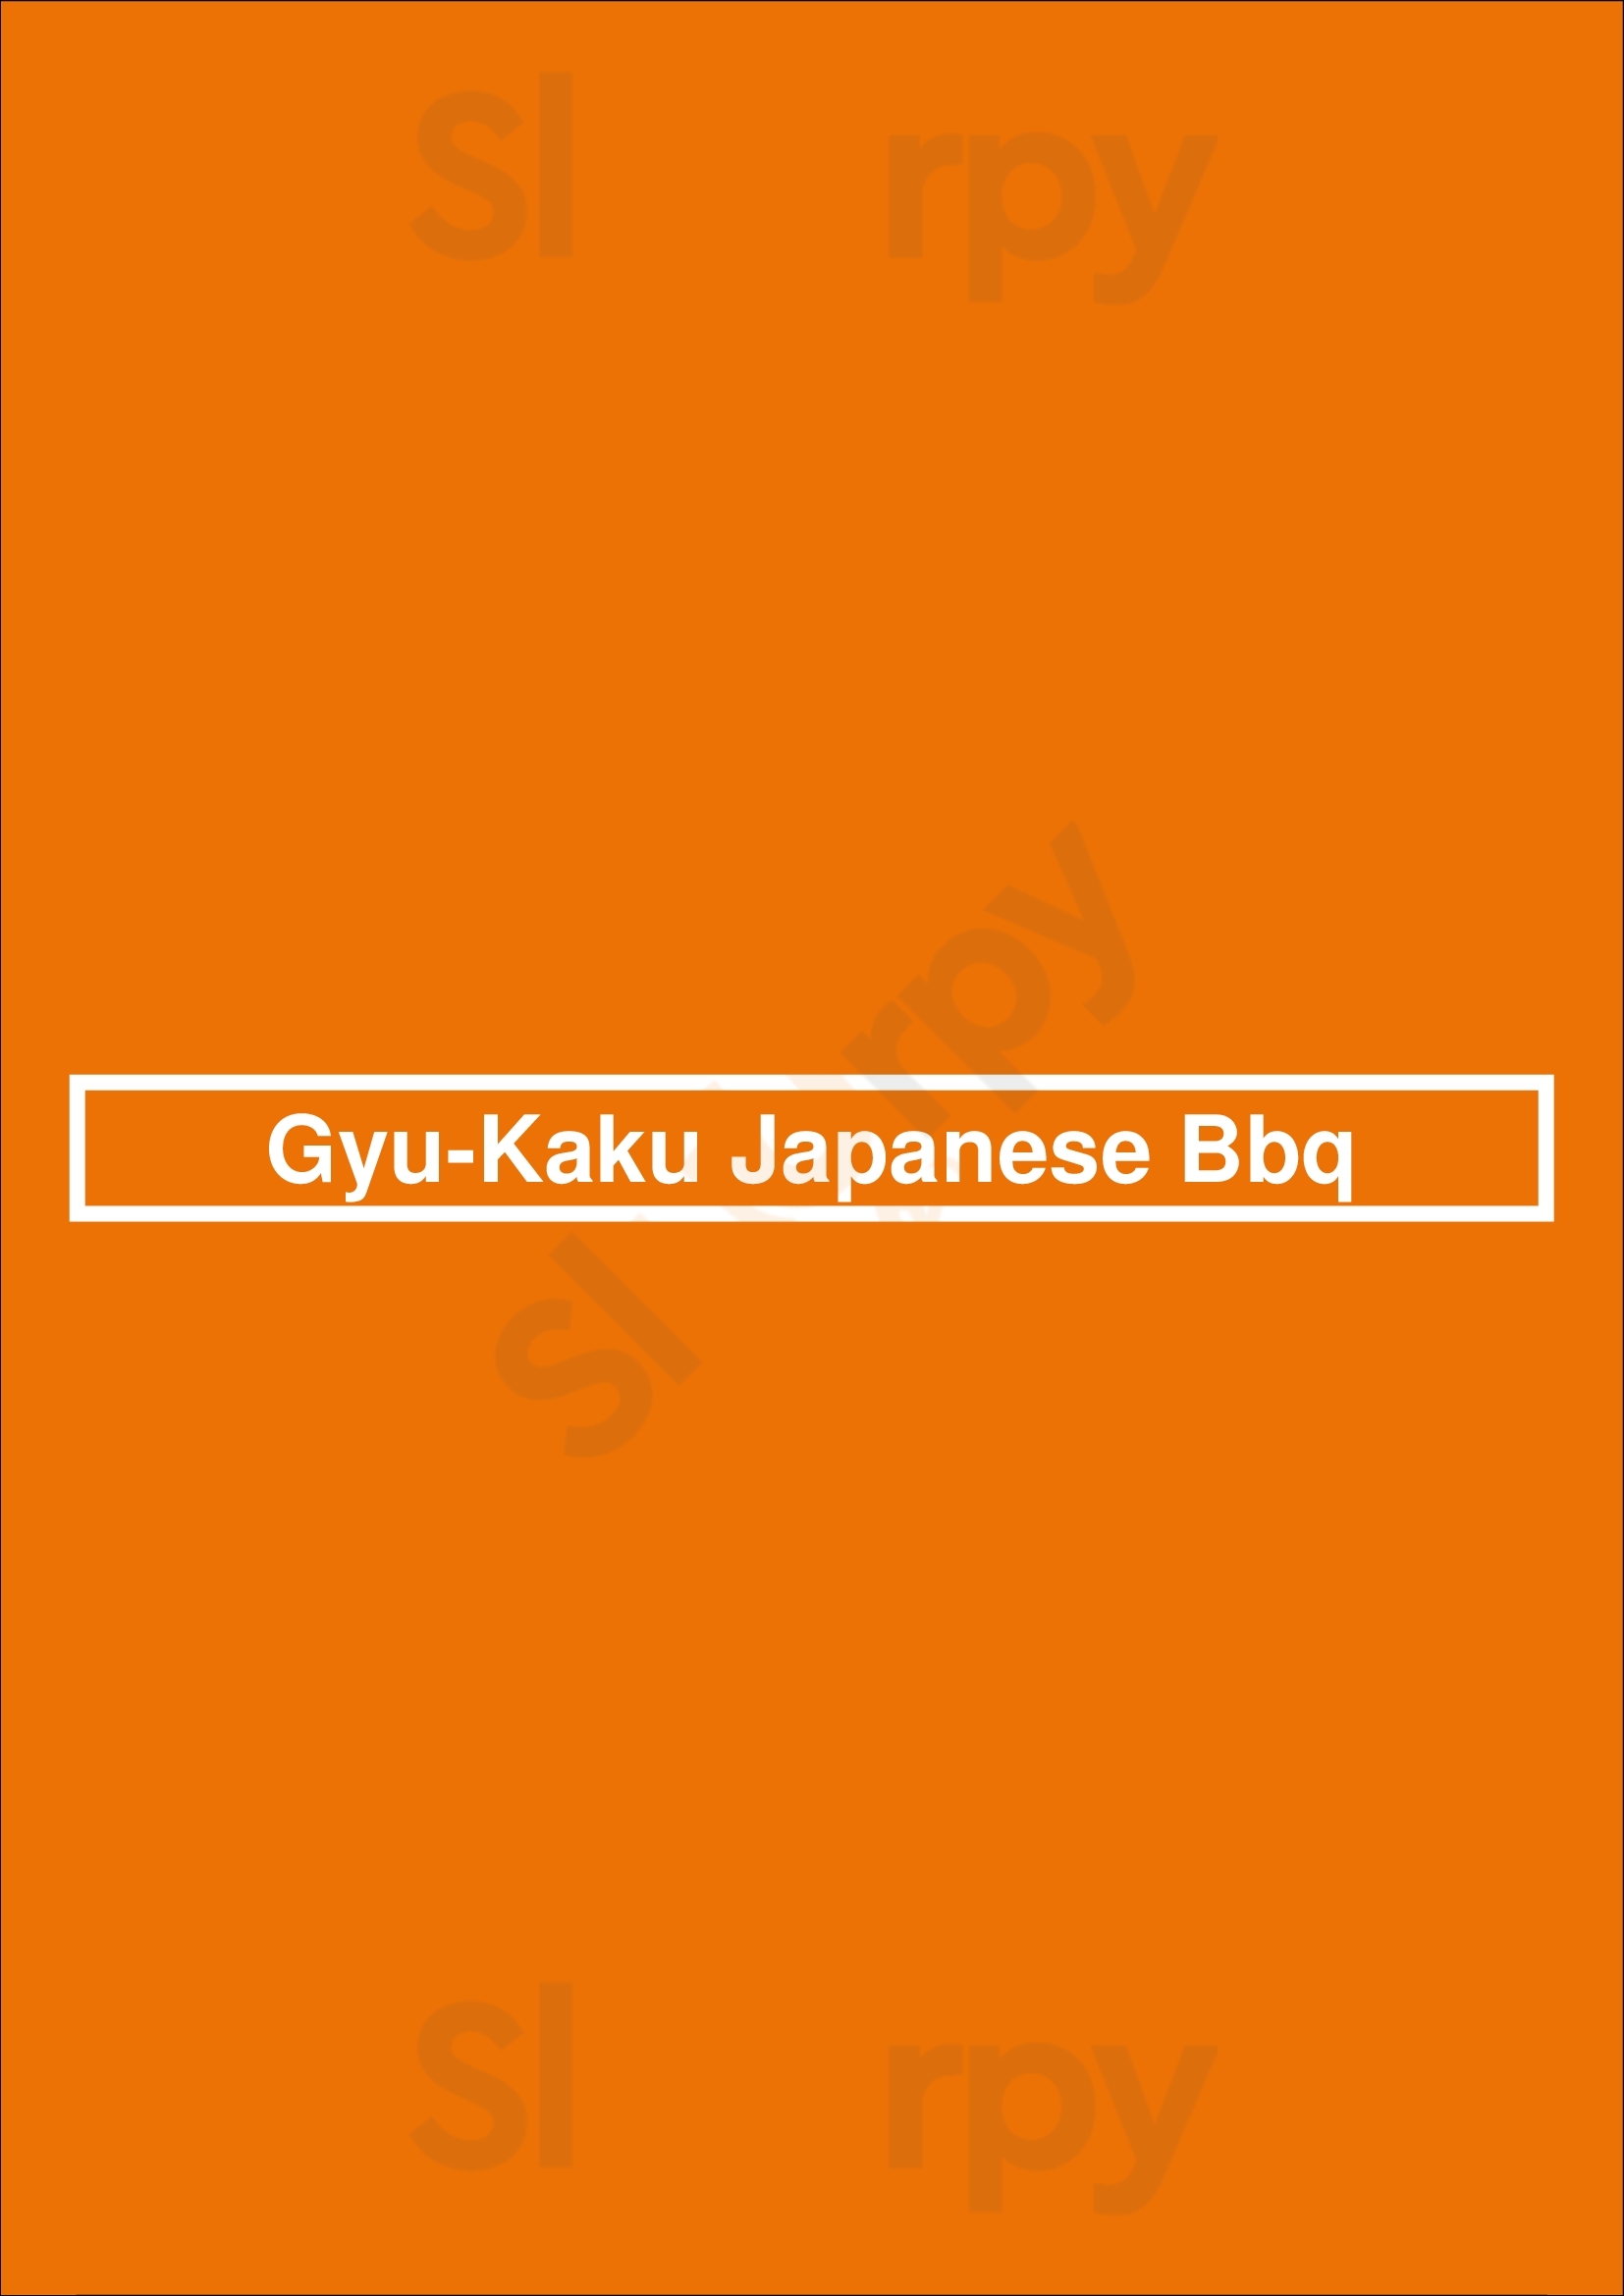 Gyu-kaku Japanese Bbq Los Angeles Menu - 1